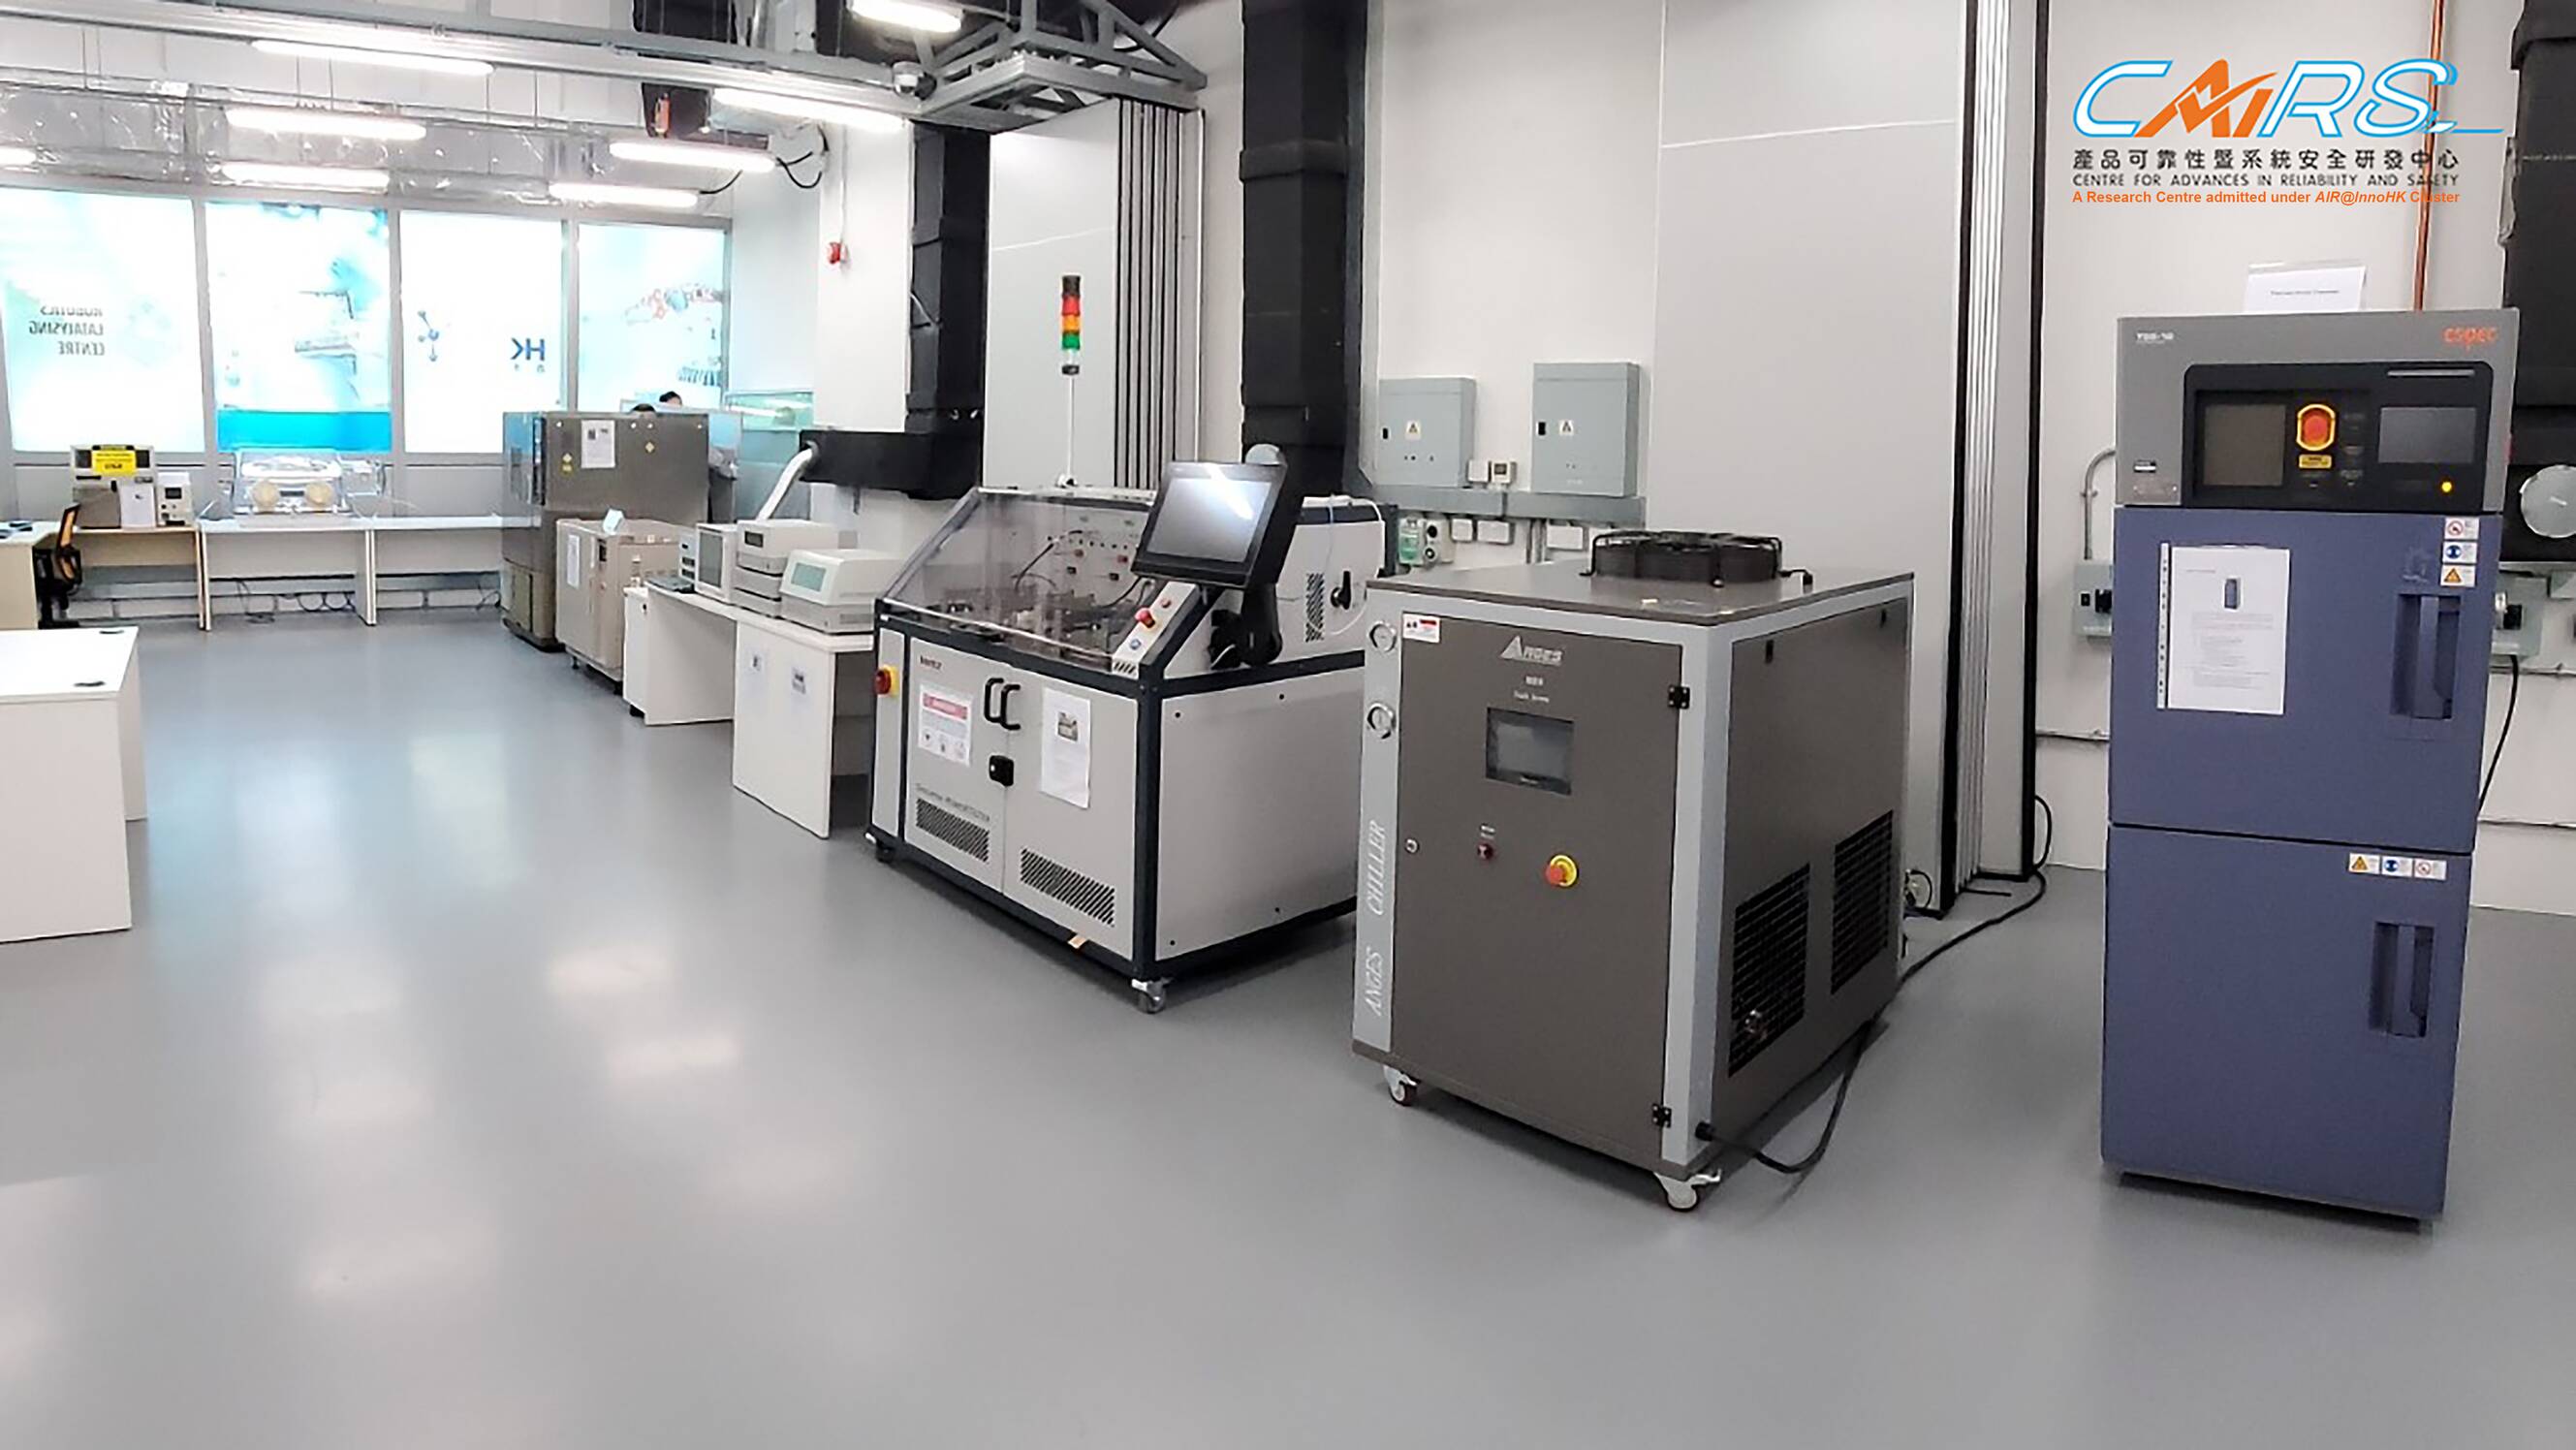 CAiRS的实验室拥有多款先进的设备供研究产品可靠及系统安全之用。